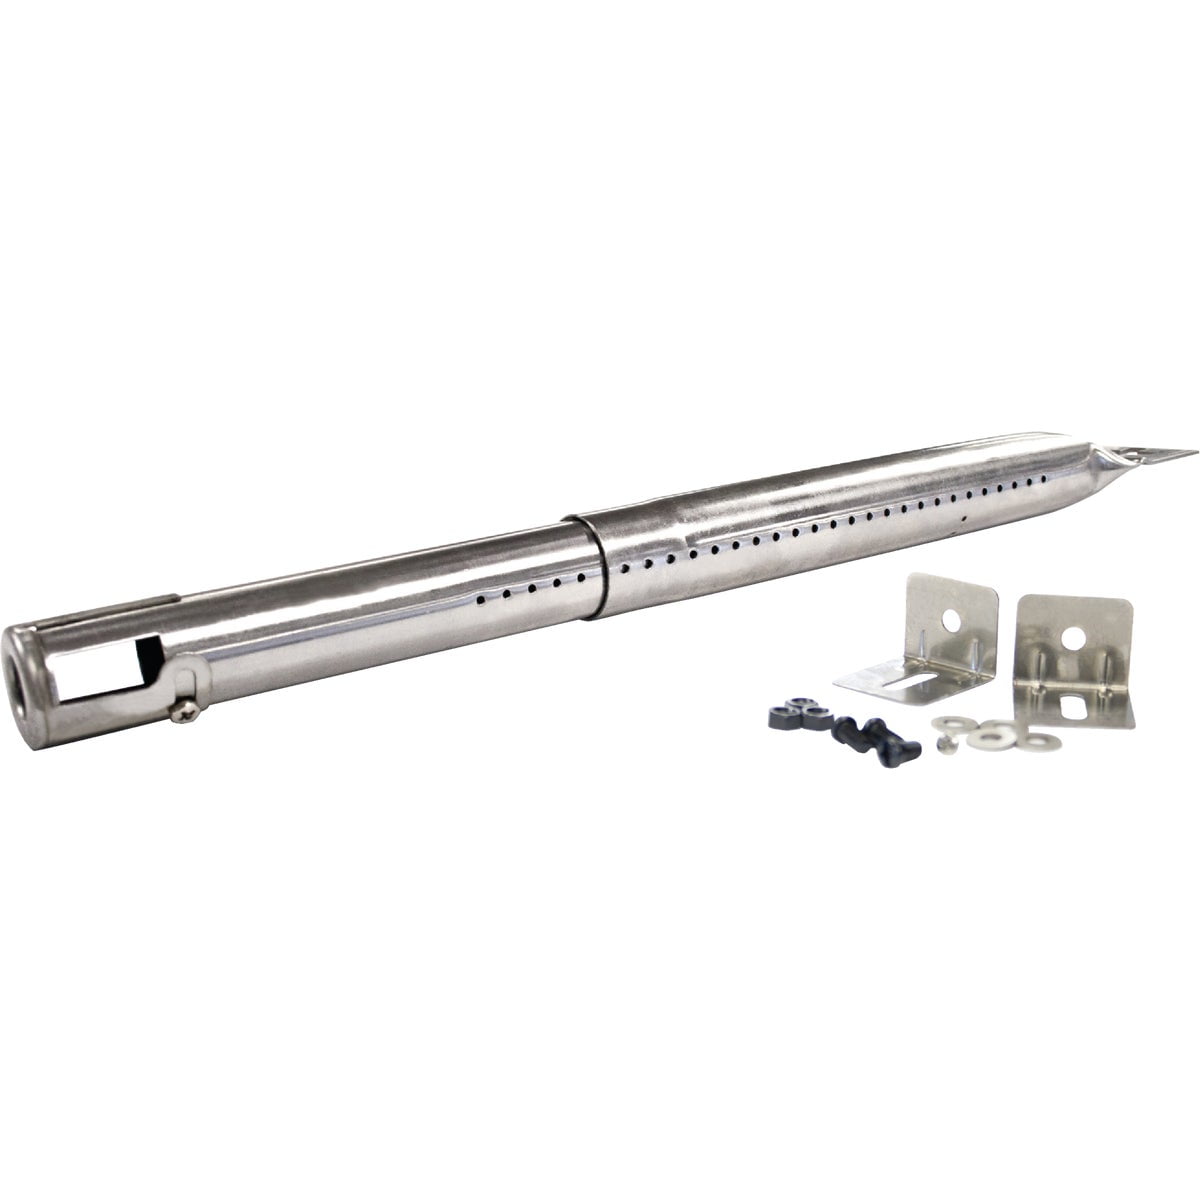 GrillPro Stainless Steel 16" Universal Bar Burner W/ 2 Flexible Venturis 23515 